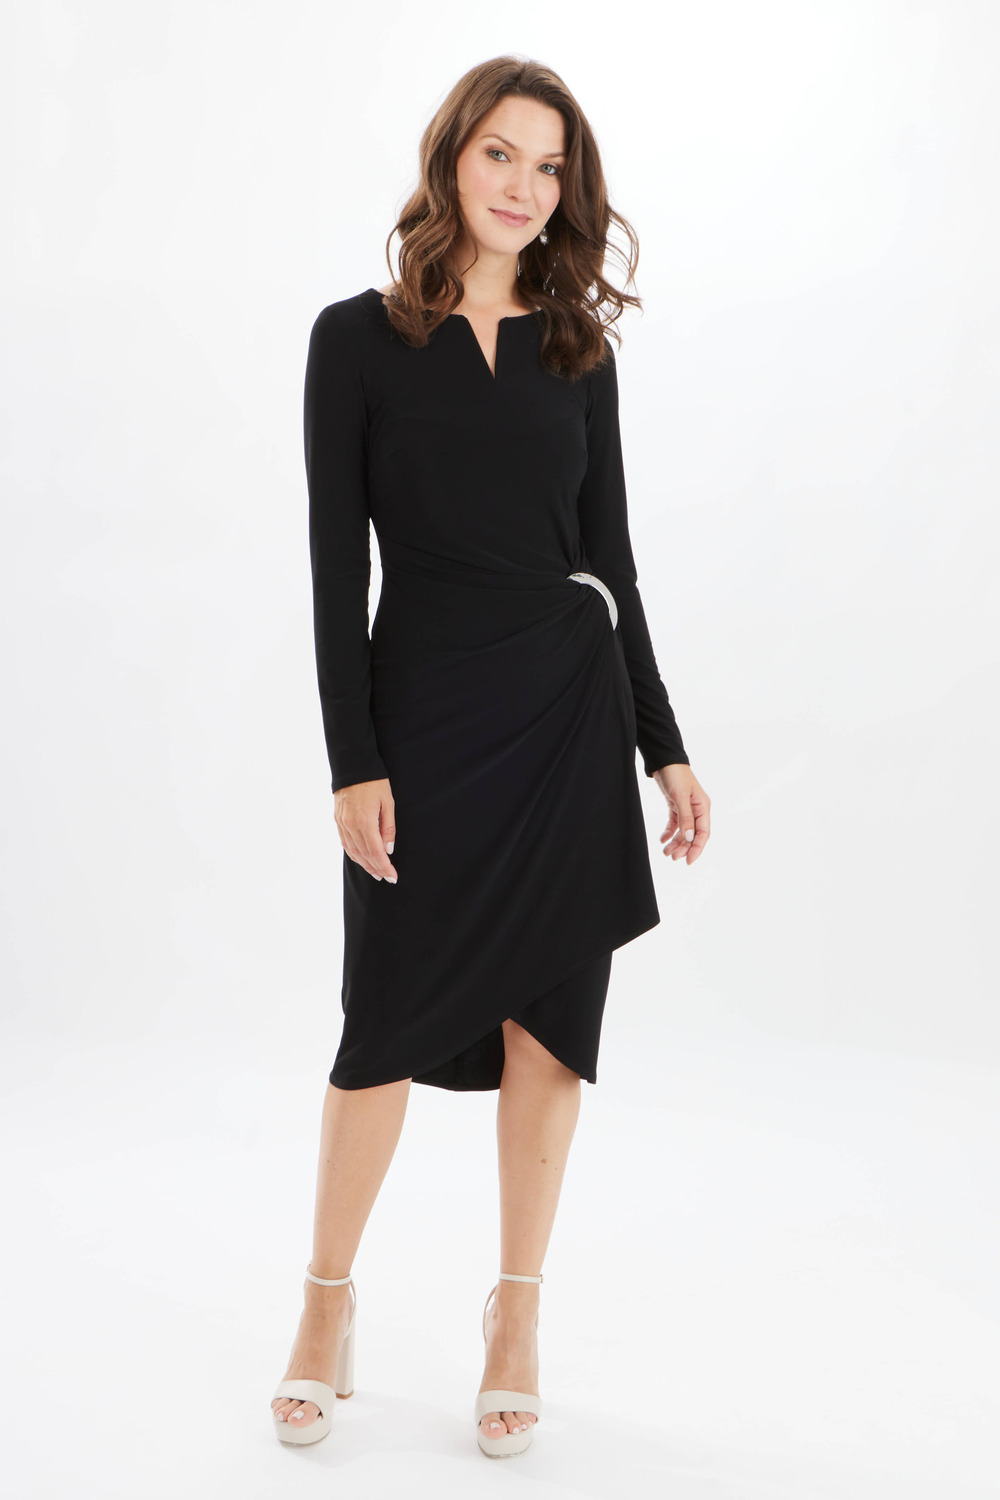 Jersey Wrap Front Dress Style 233131. Black